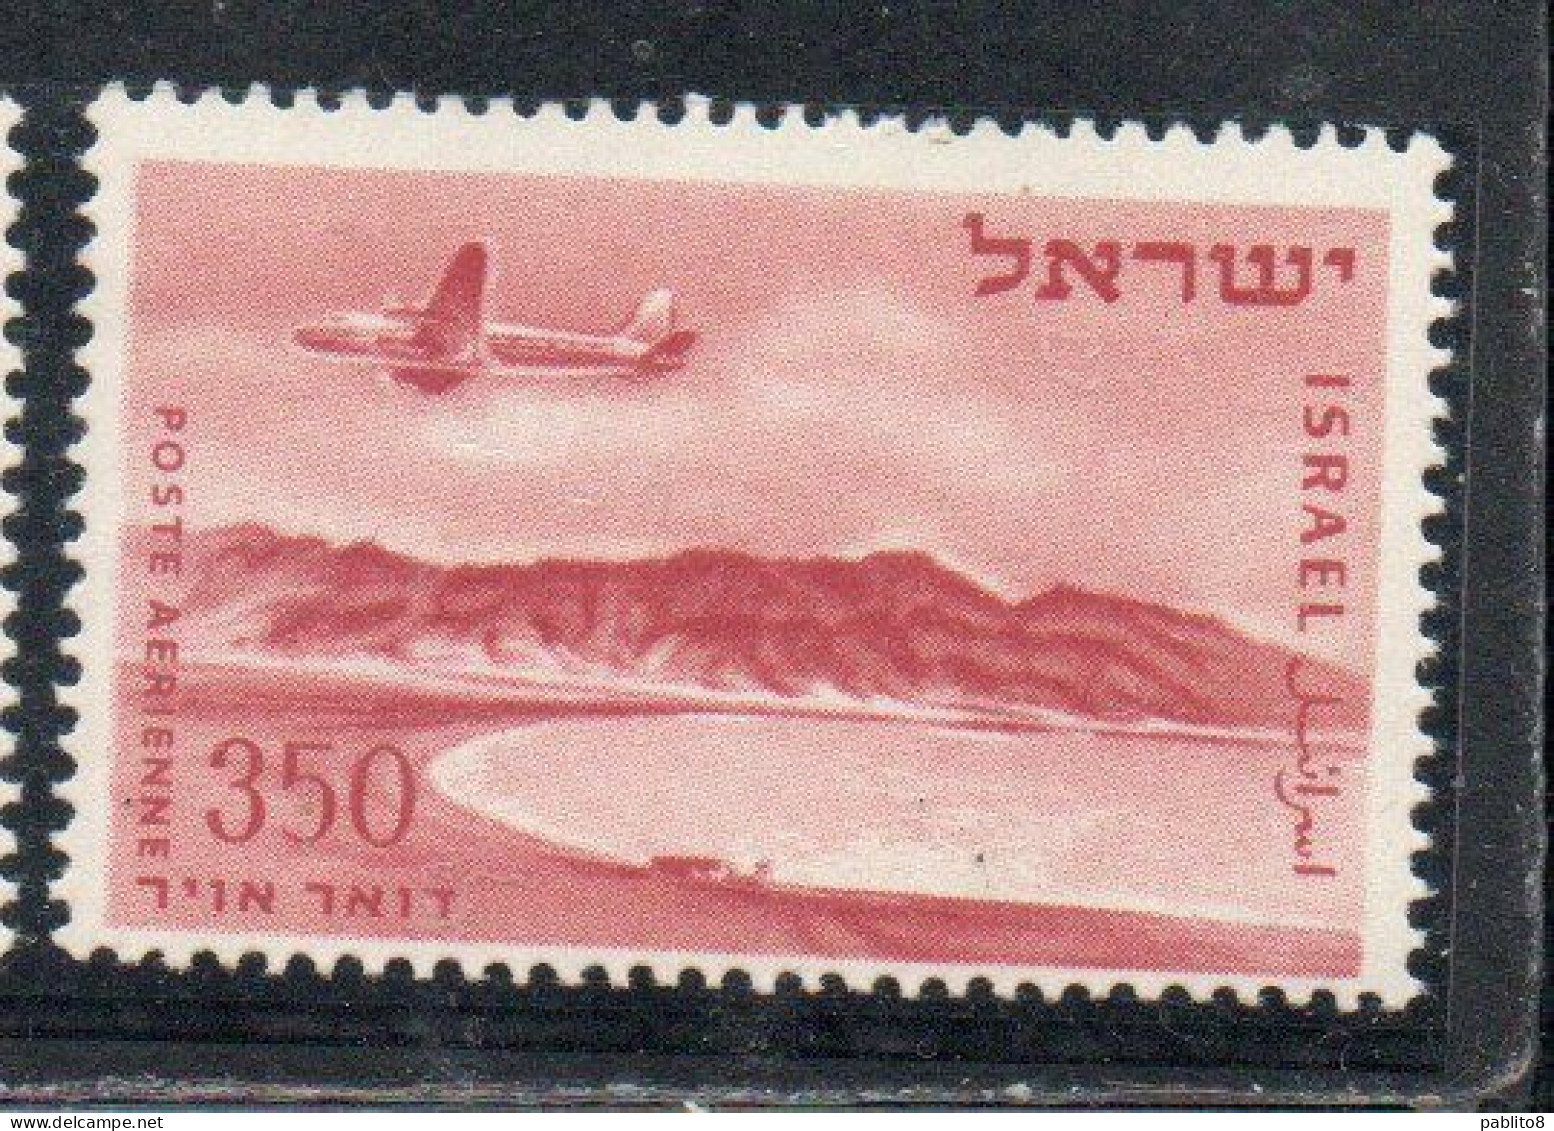 ISRAEL ISRAELE 1953 1956 AIRMAIL AIR POST MAIL BAY OF ELAT RED SEA 350p MNH - Posta Aerea